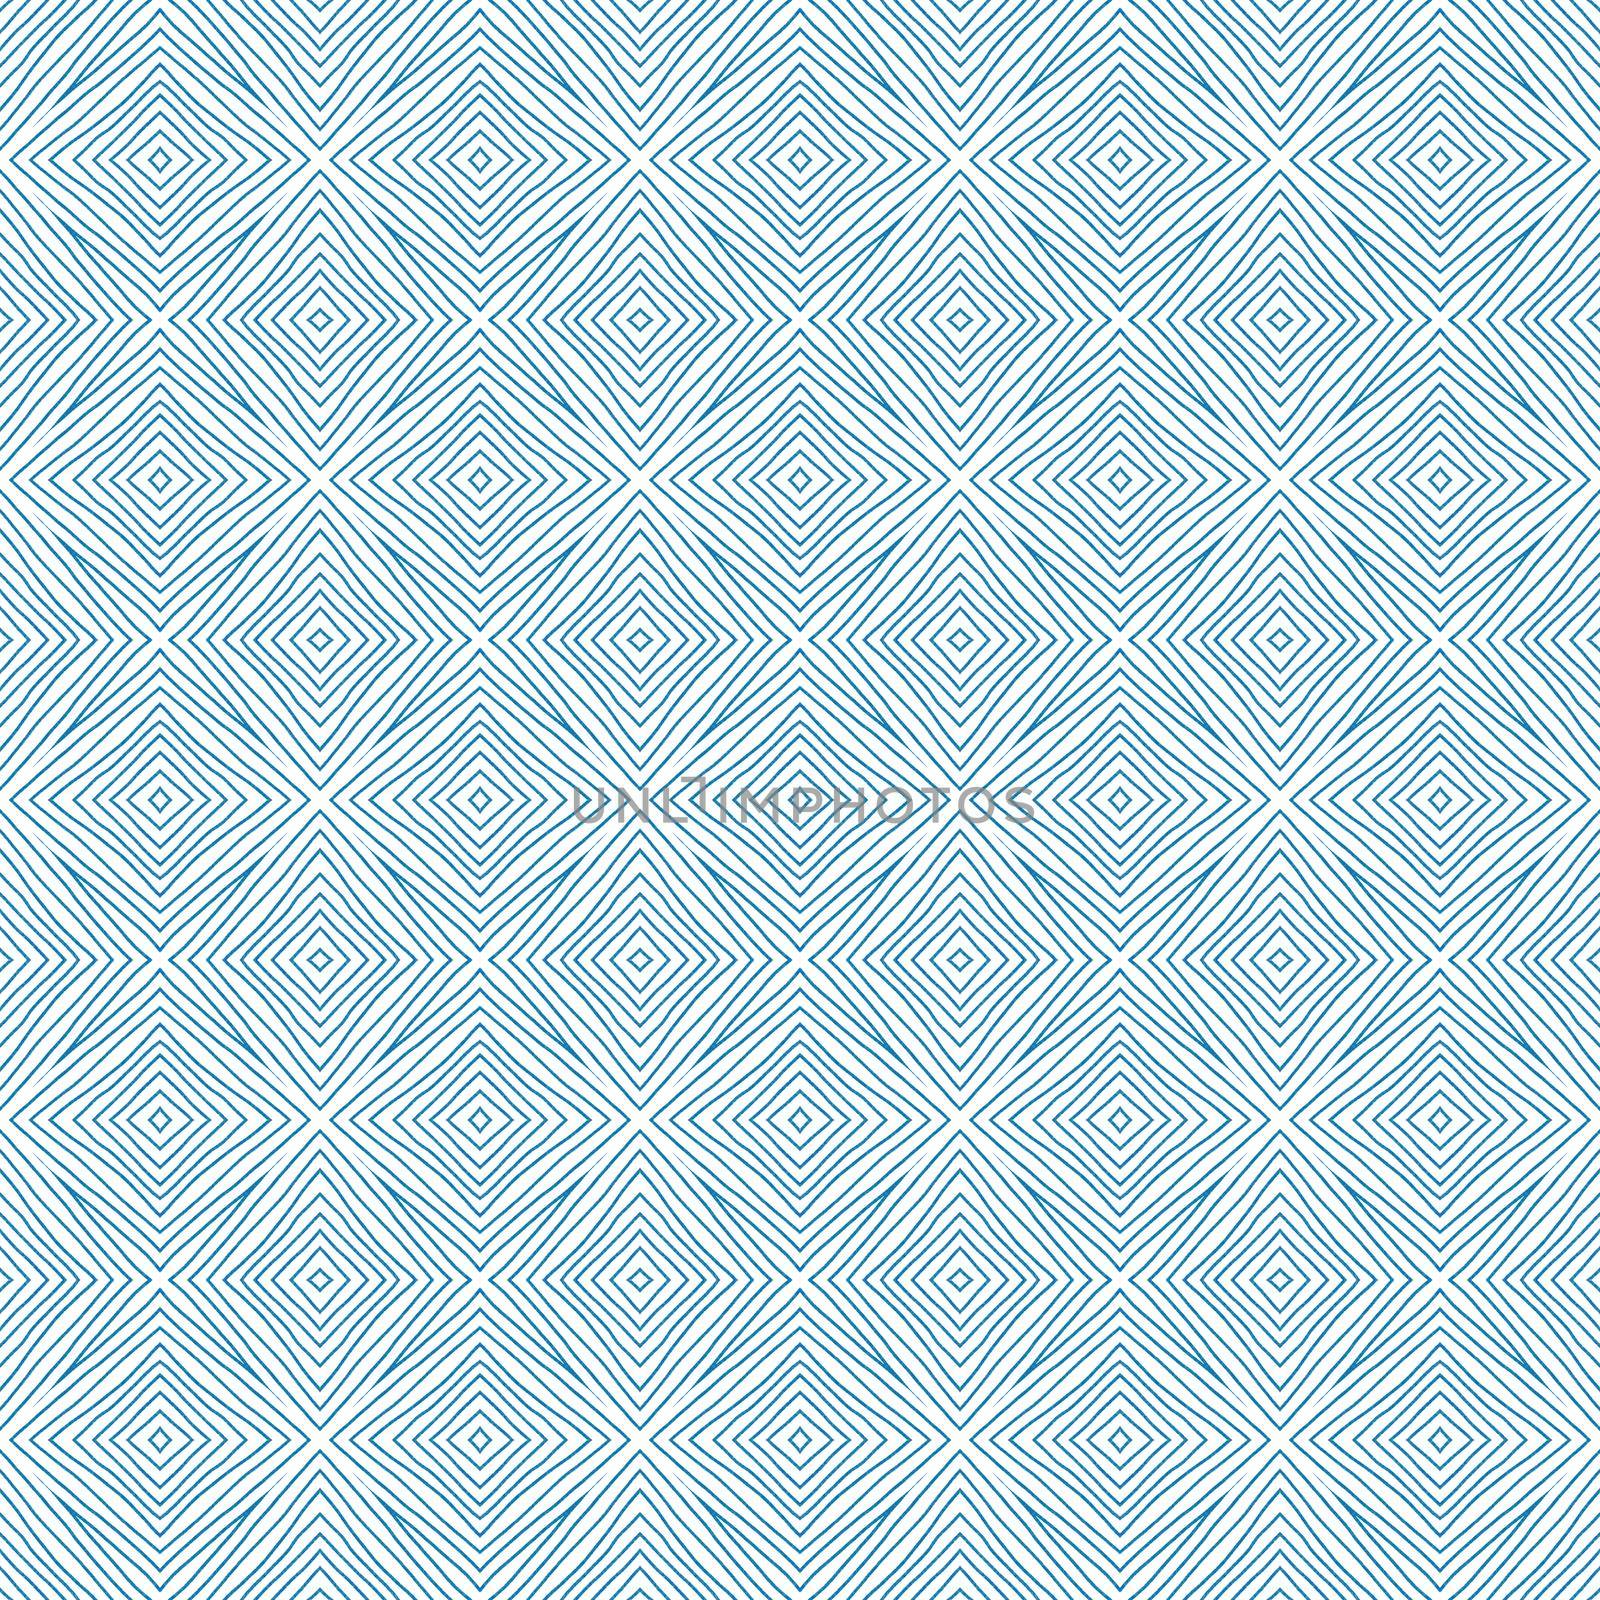 Tiled watercolor pattern. Blue symmetrical by beginagain